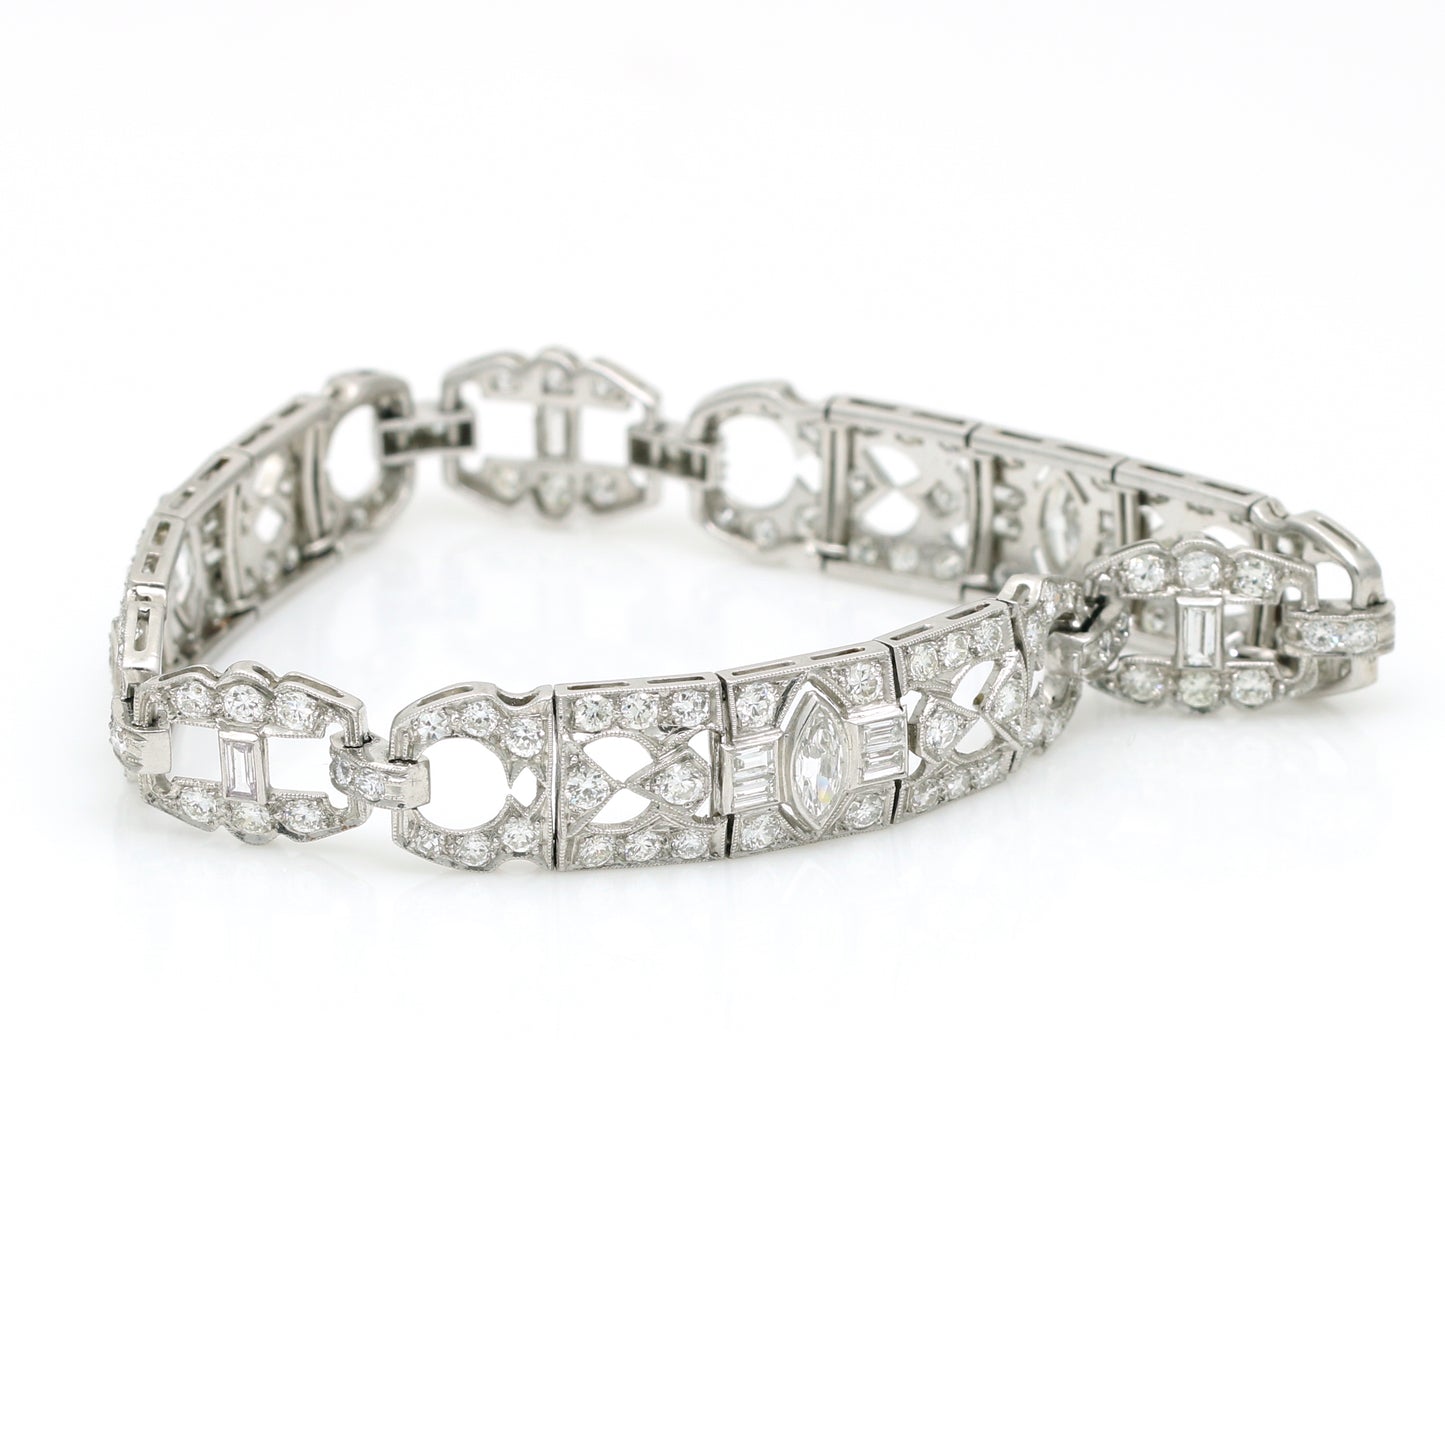 Women's Art Deco Diamond Link Bracelet in Platinum